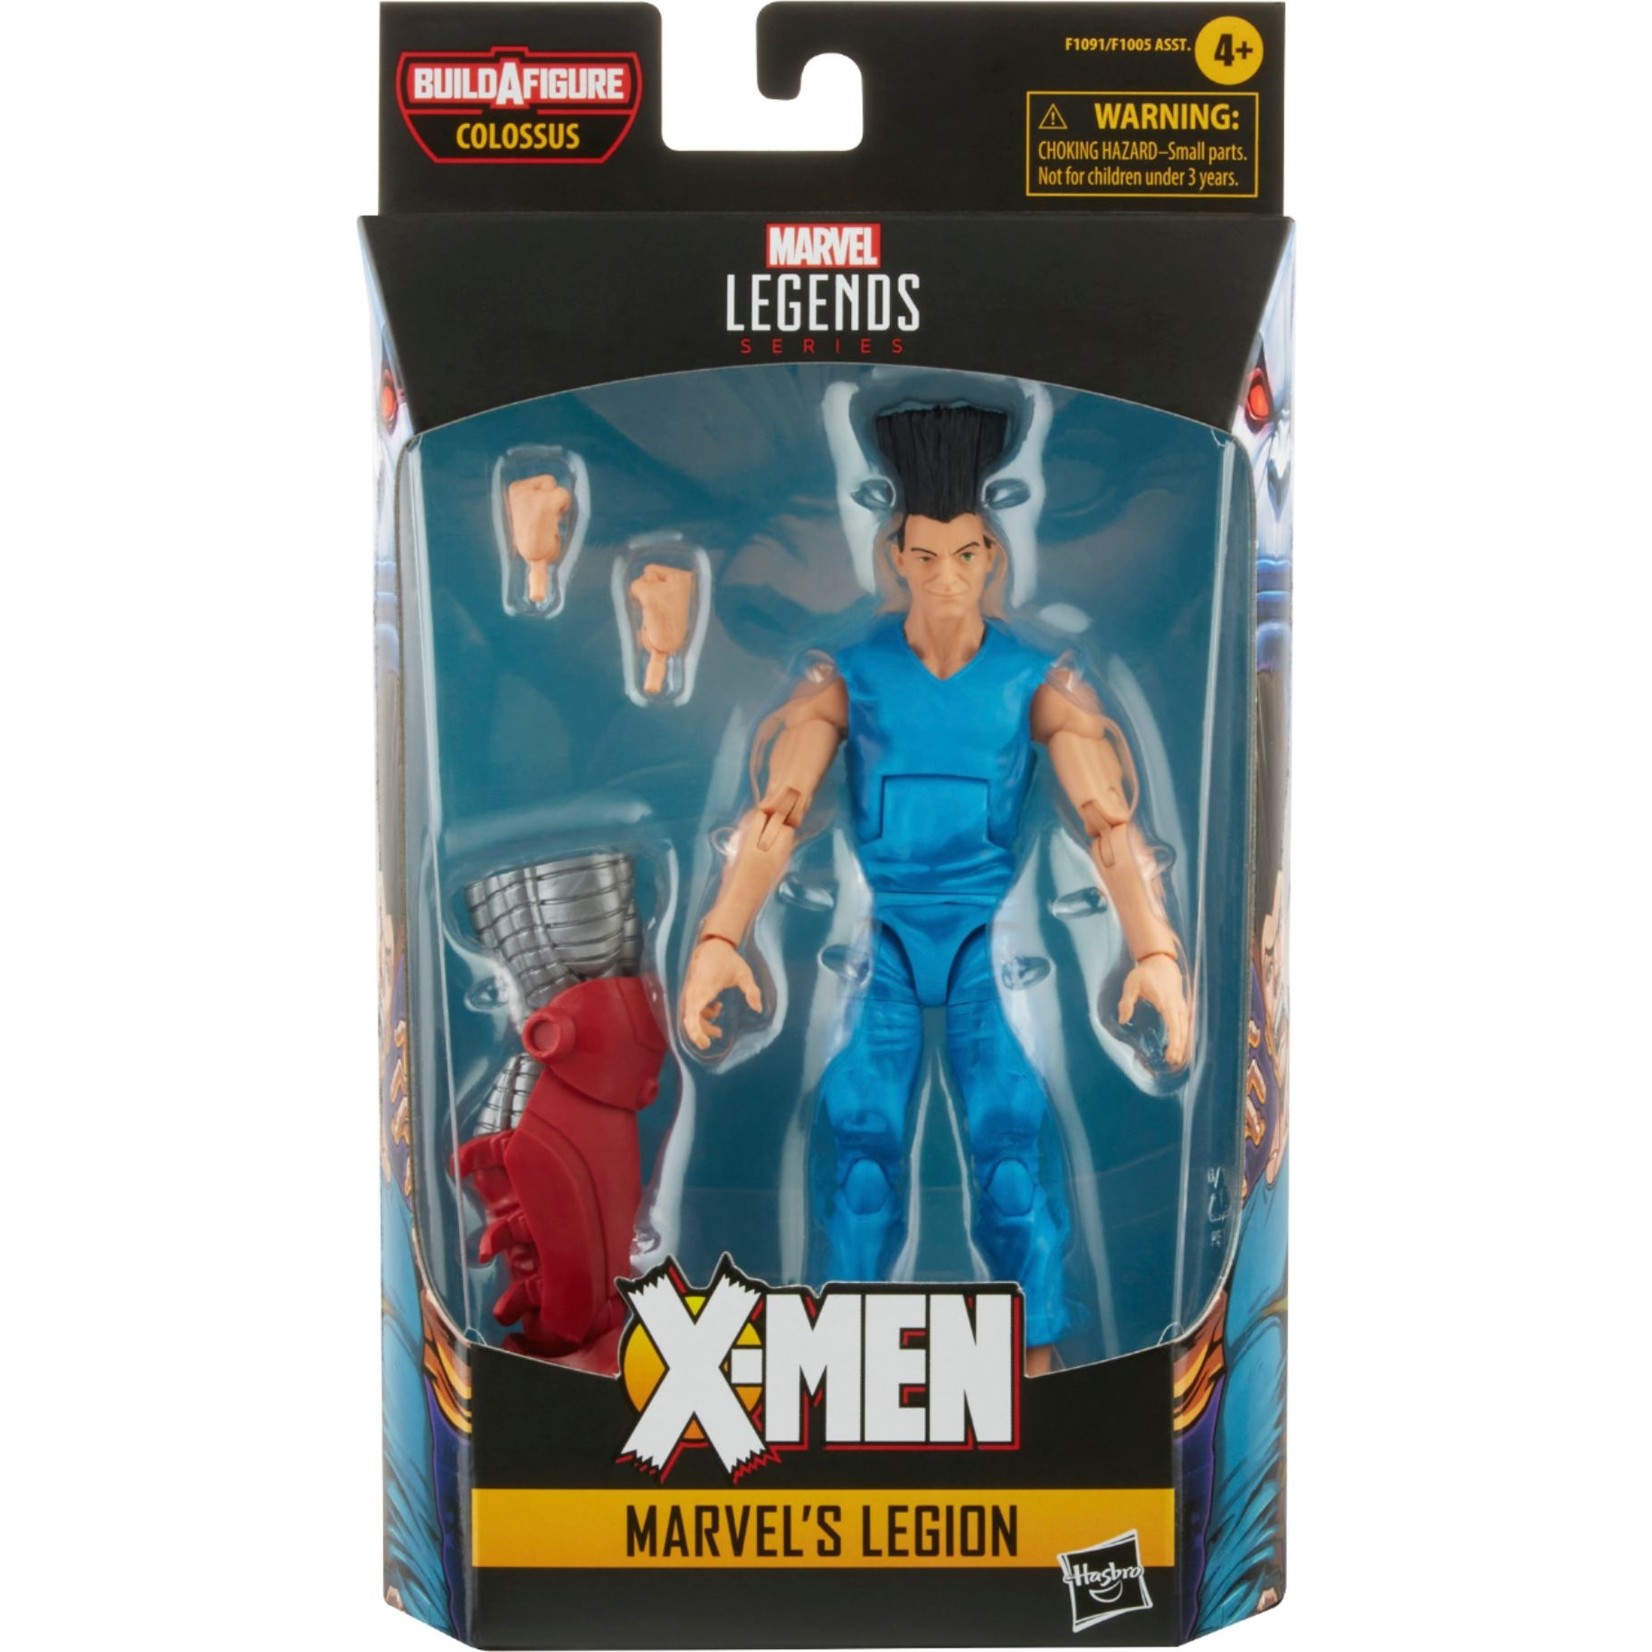 Marvel Legends Marvel Legends Series X-Men 6-inch Action Figure - Marvel's Legion